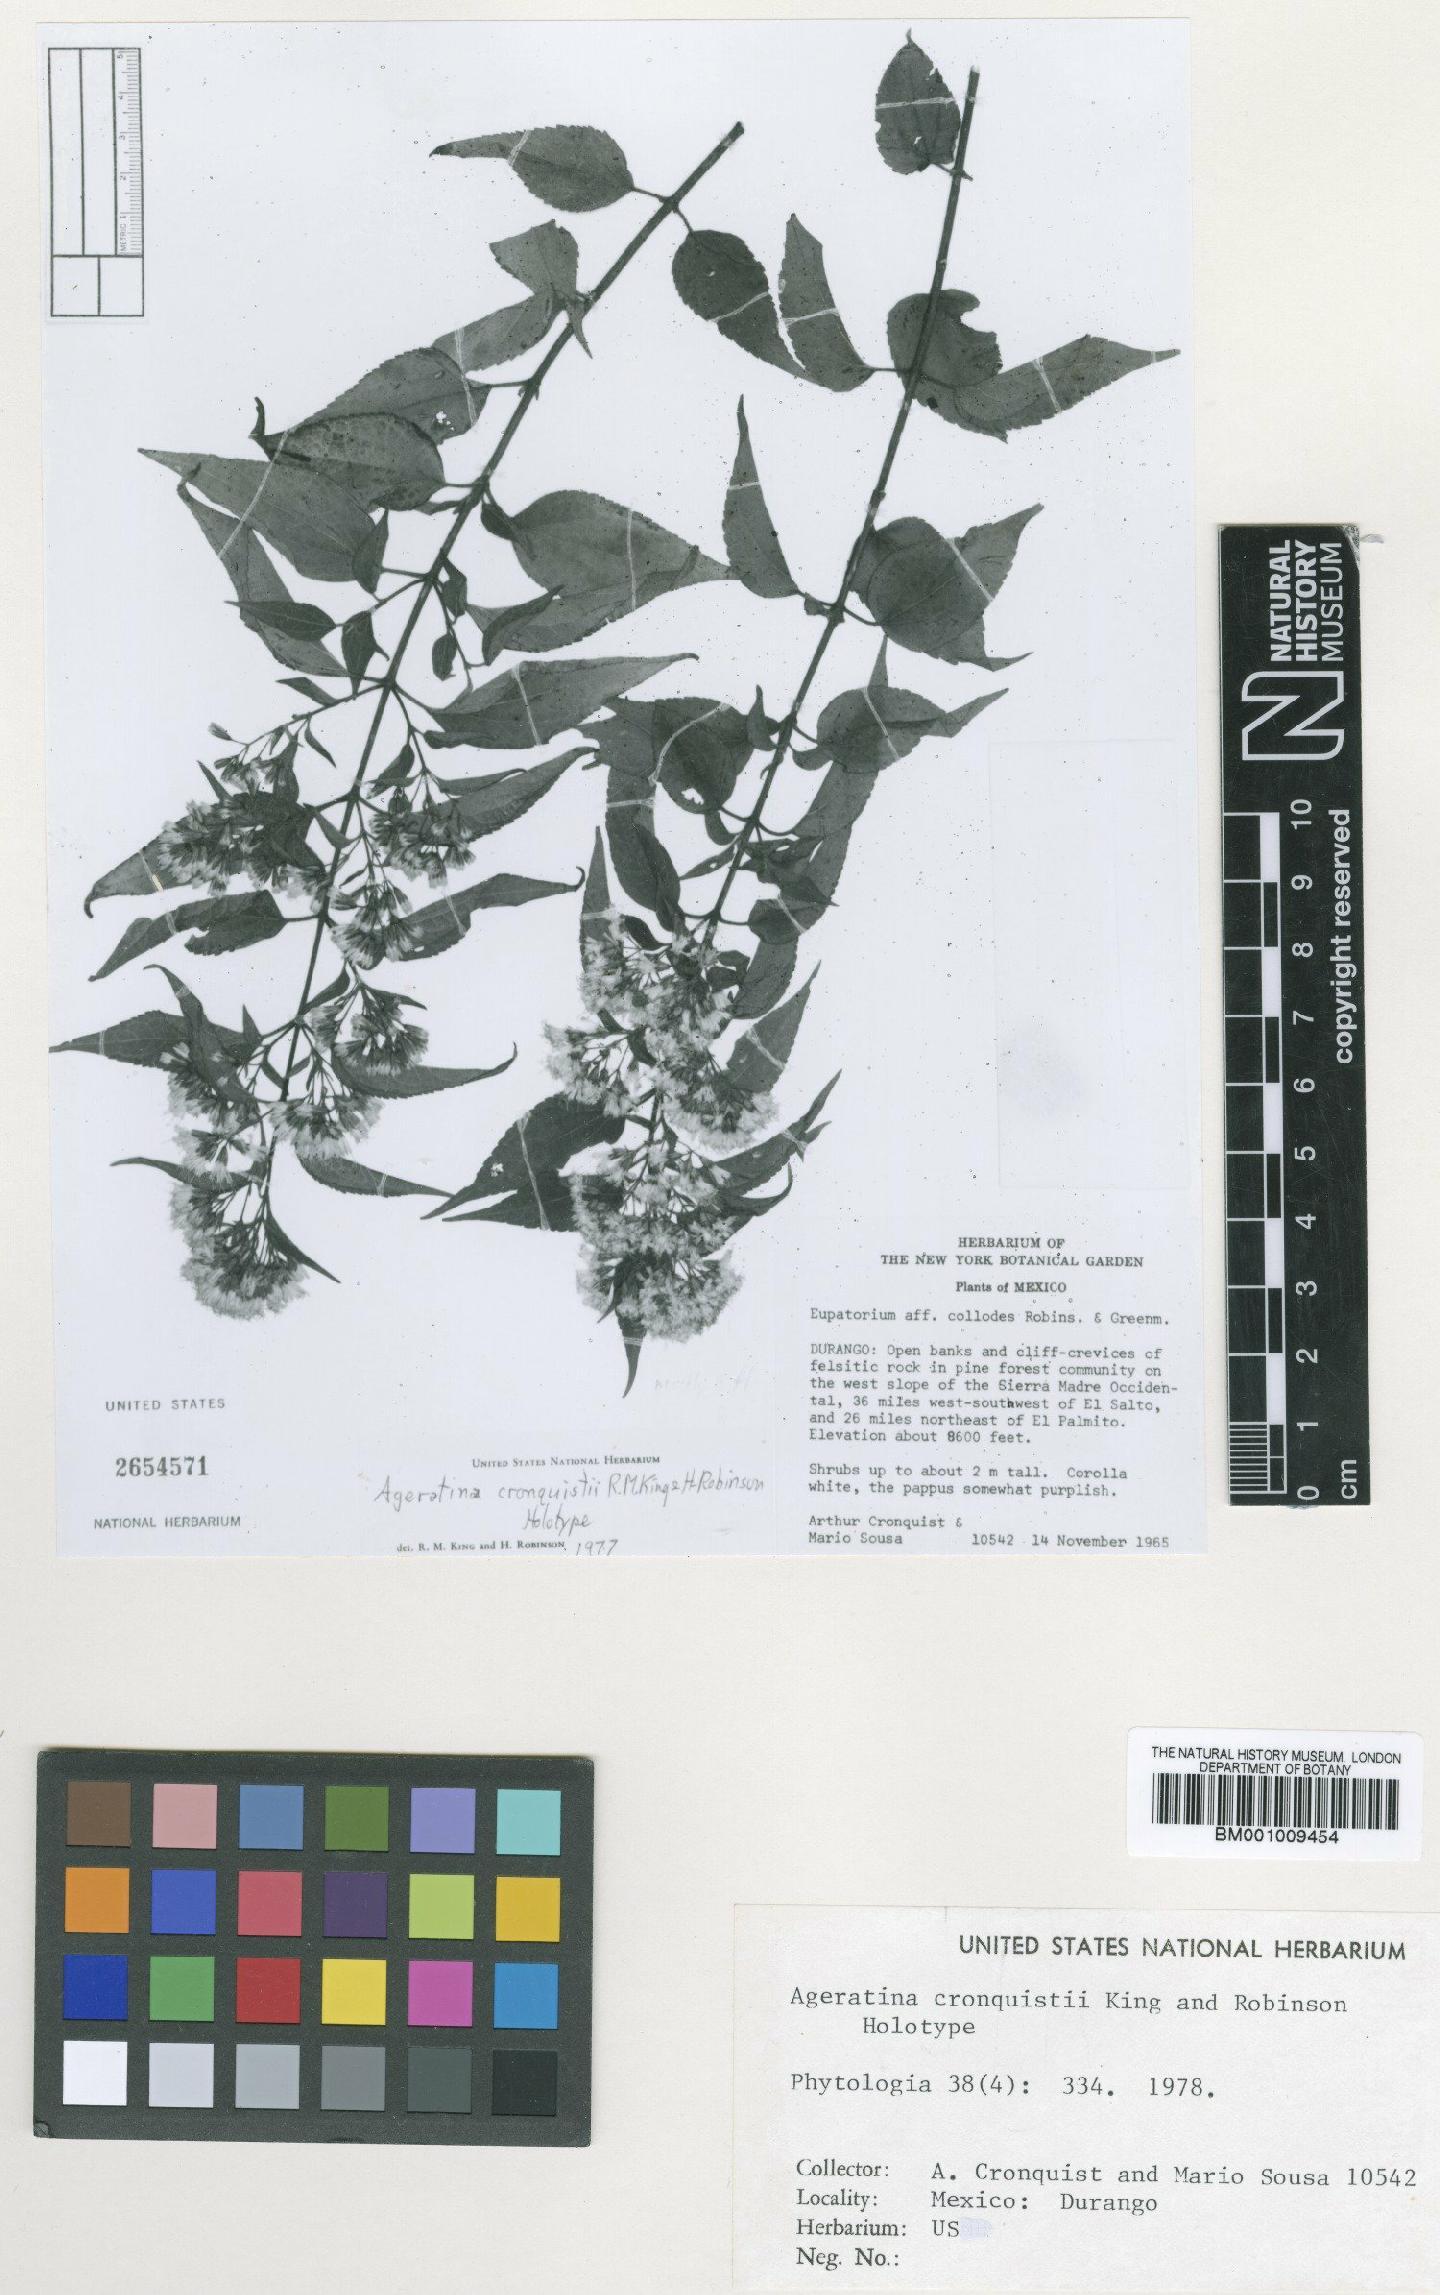 To NHMUK collection (Ageratina cronquistii R.M.King & H.Rob.; NHMUK:ecatalogue:610789)